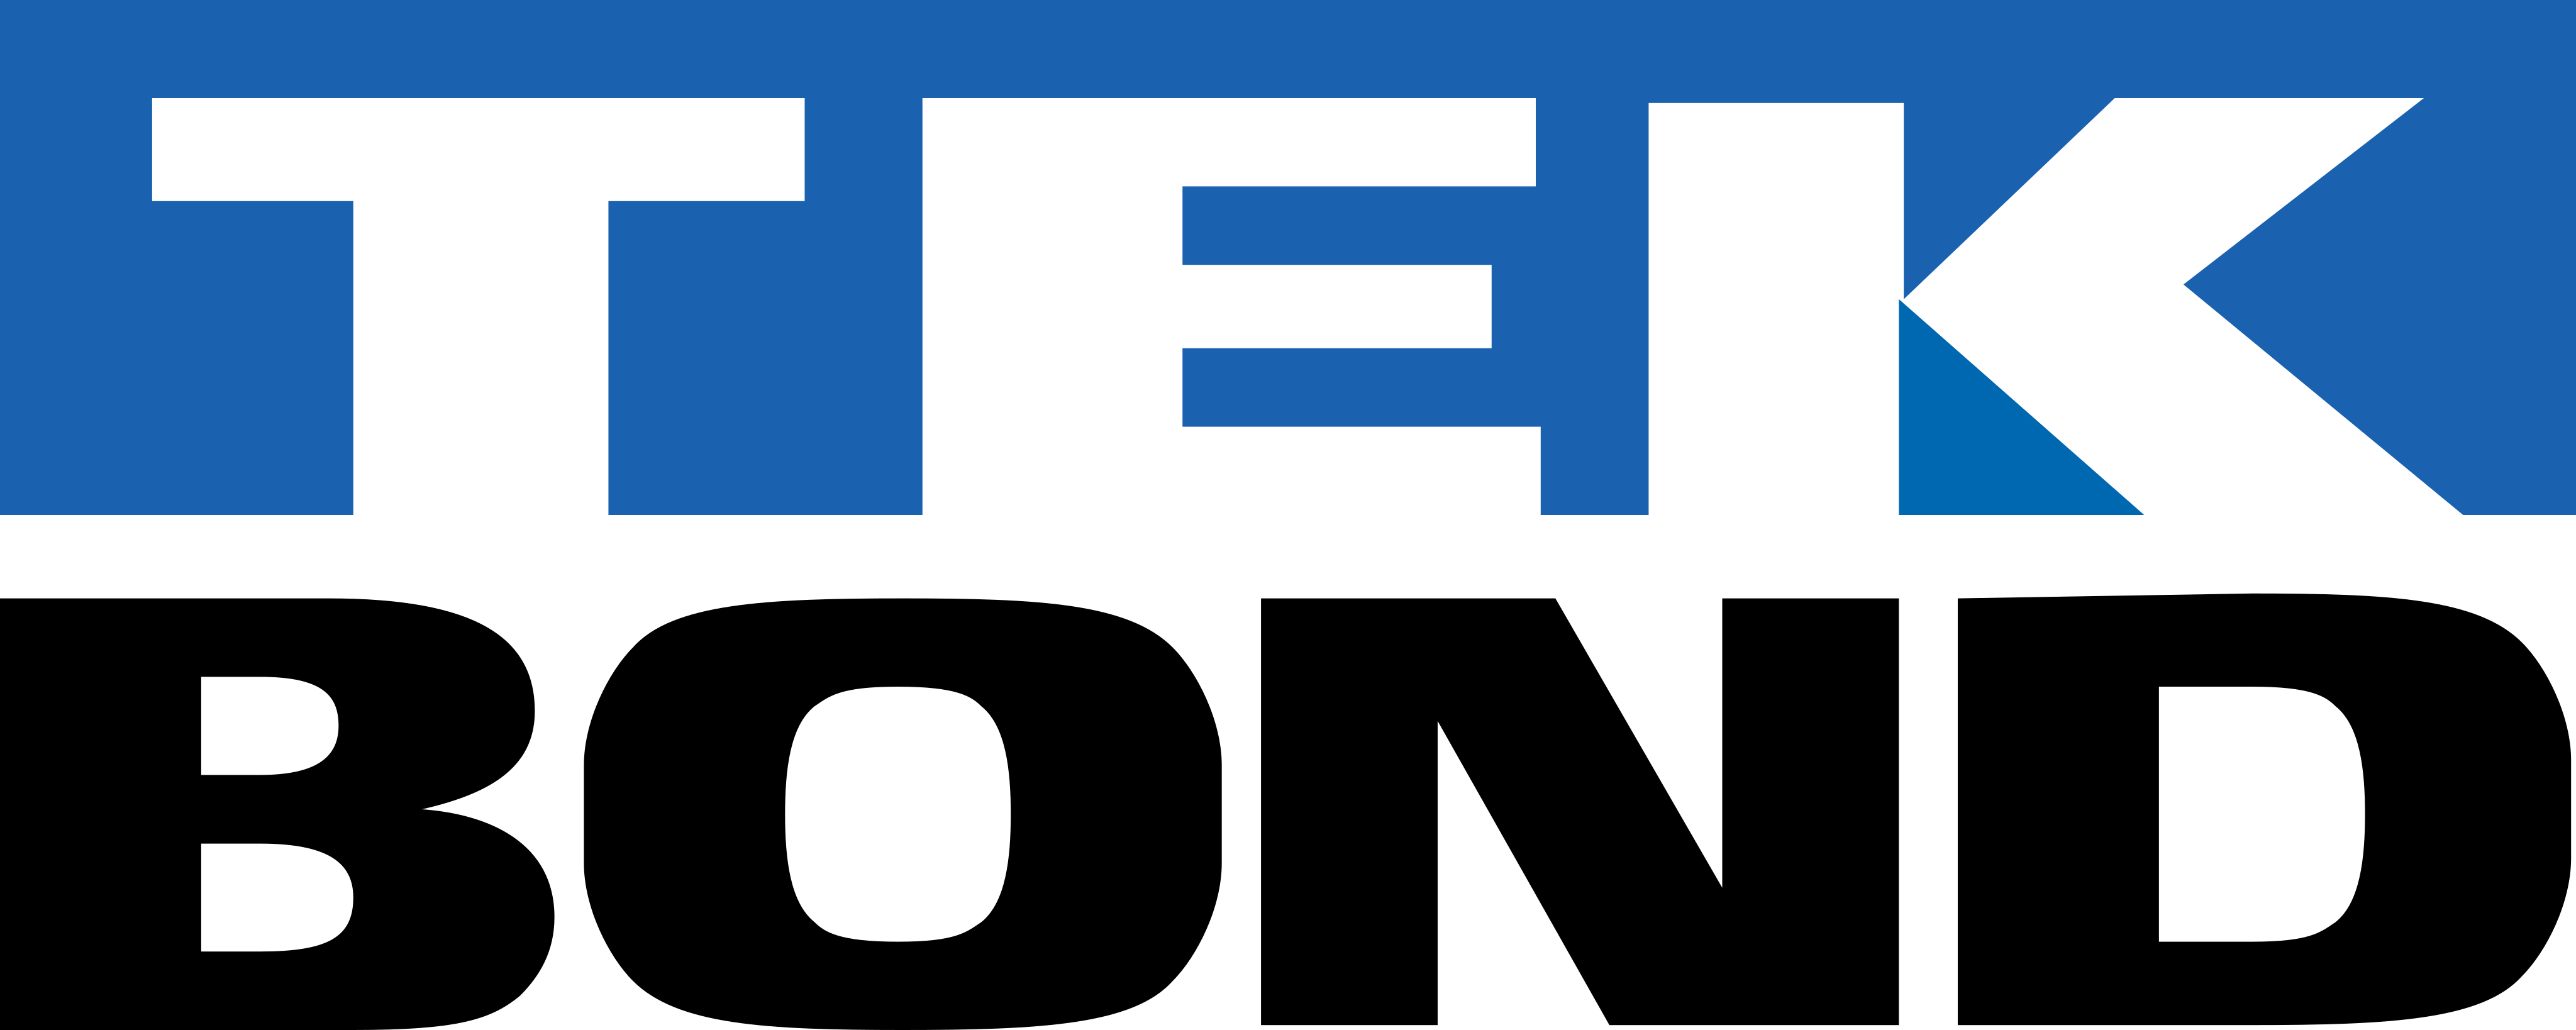 tekbond logo - Tekbond Logo